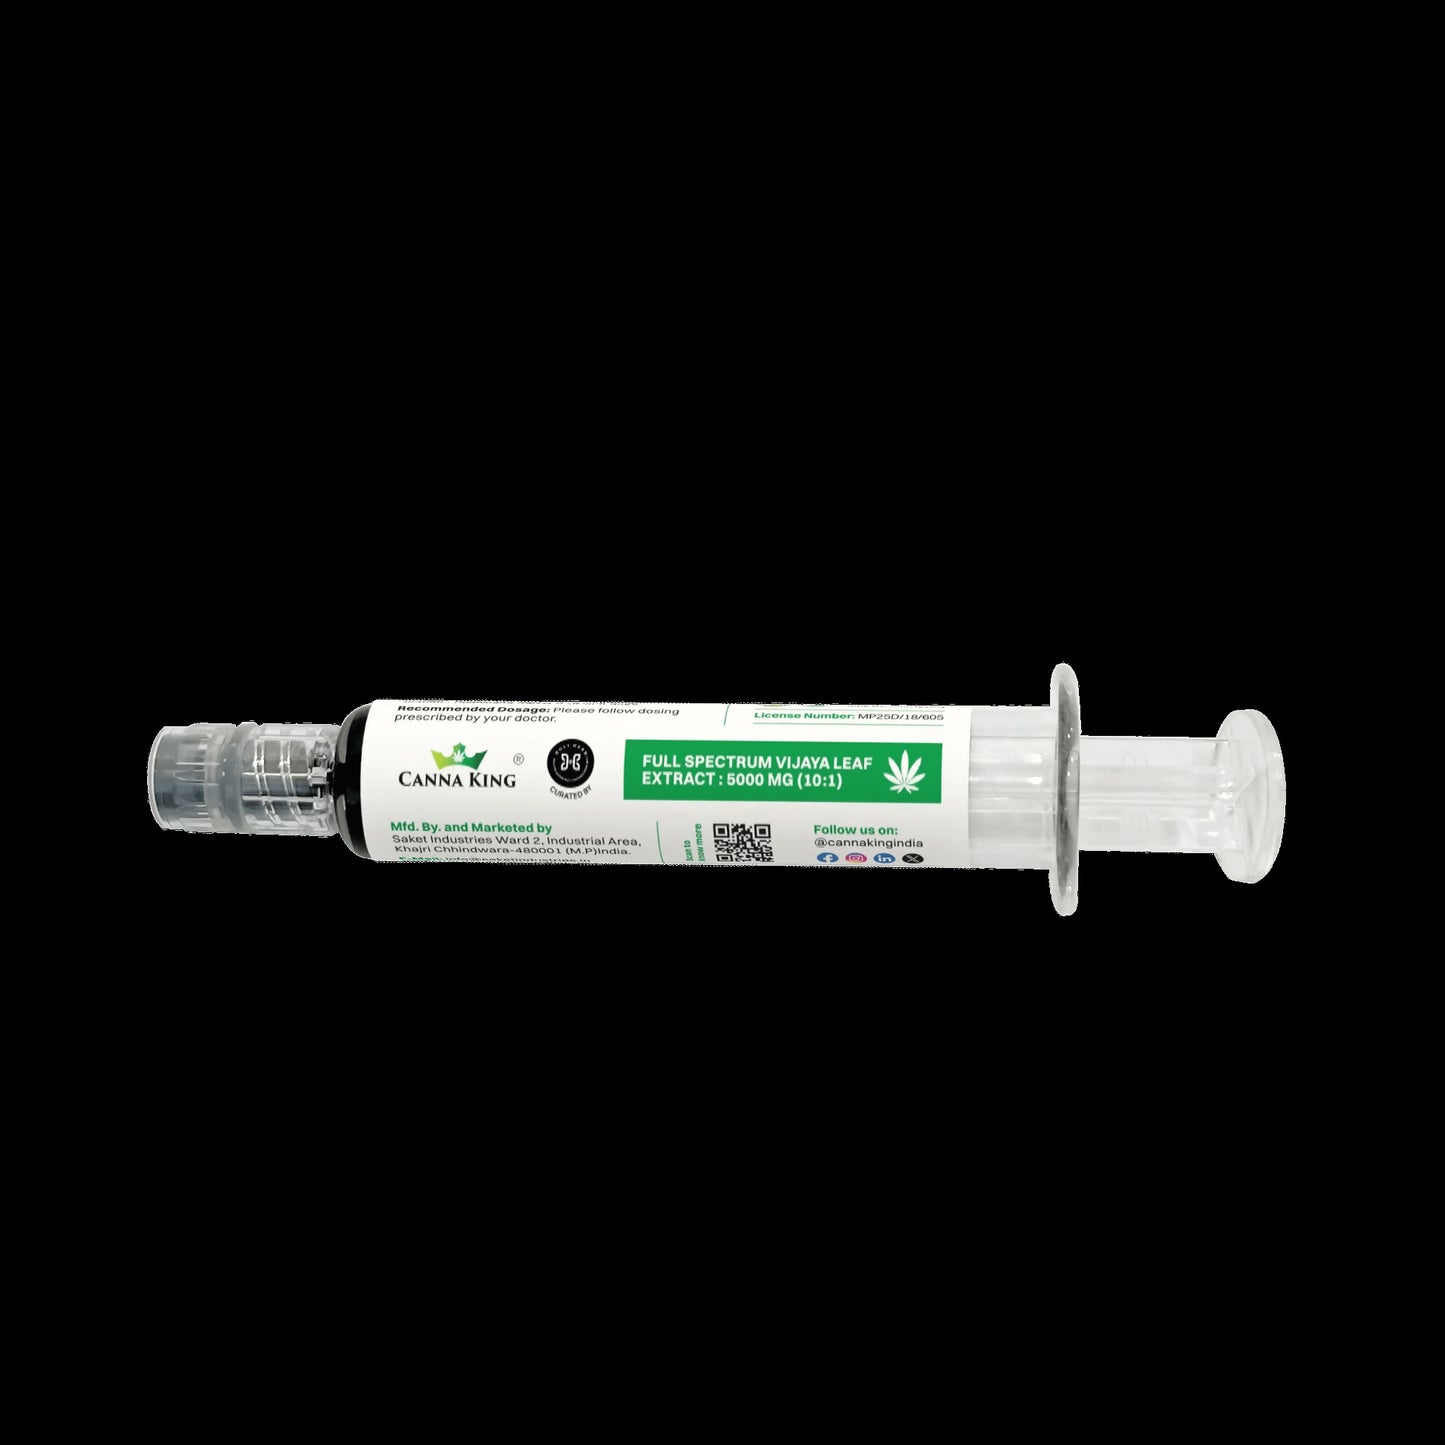 Cannaking - Full Spectrum Vijaya Extract, 5000 mg, 10:1 CBD:THC